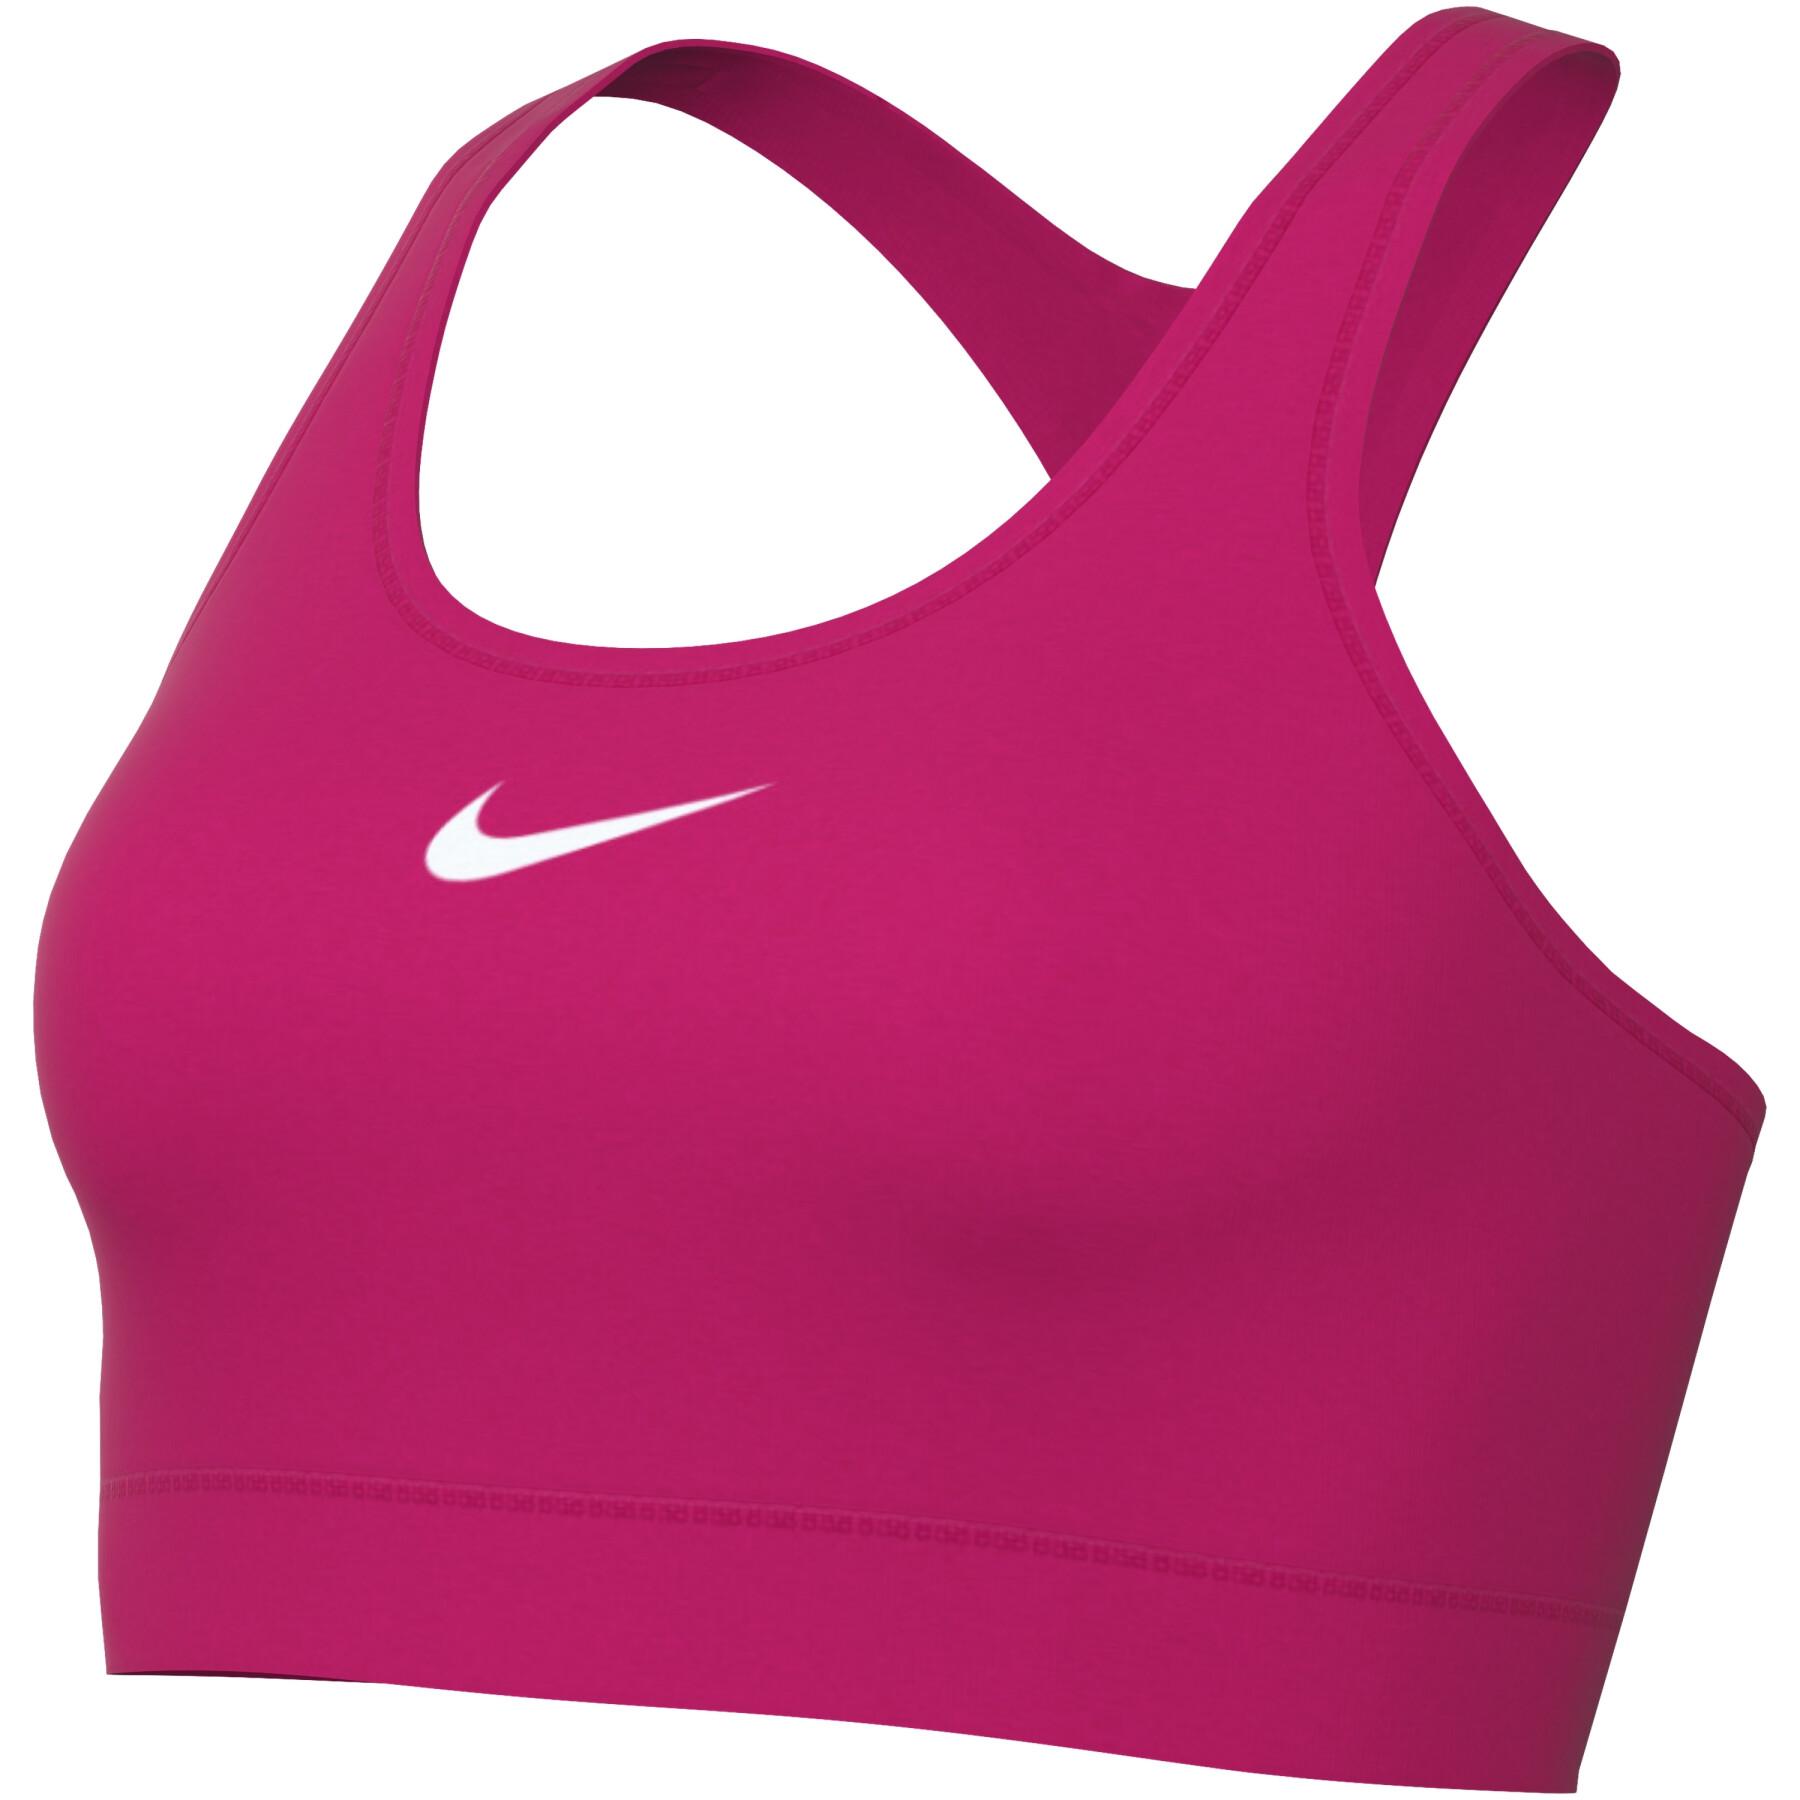 Women's bra Nike Dri-FIT Swoosh High Support - Nike - Brands - Handball wear